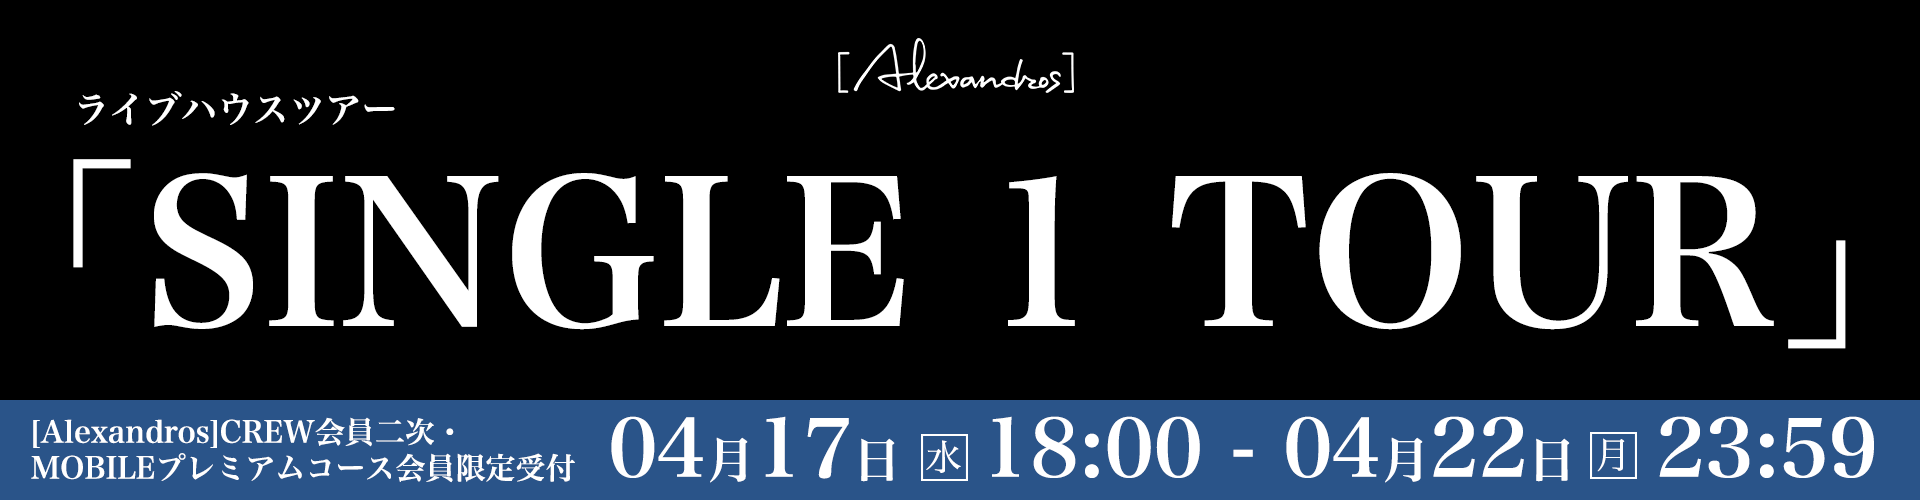 [Alexandros] ライブハウスツアー「SINGLE 1 TOUR」[Alexandros]MOBILEプレミアムコース会員限定受付